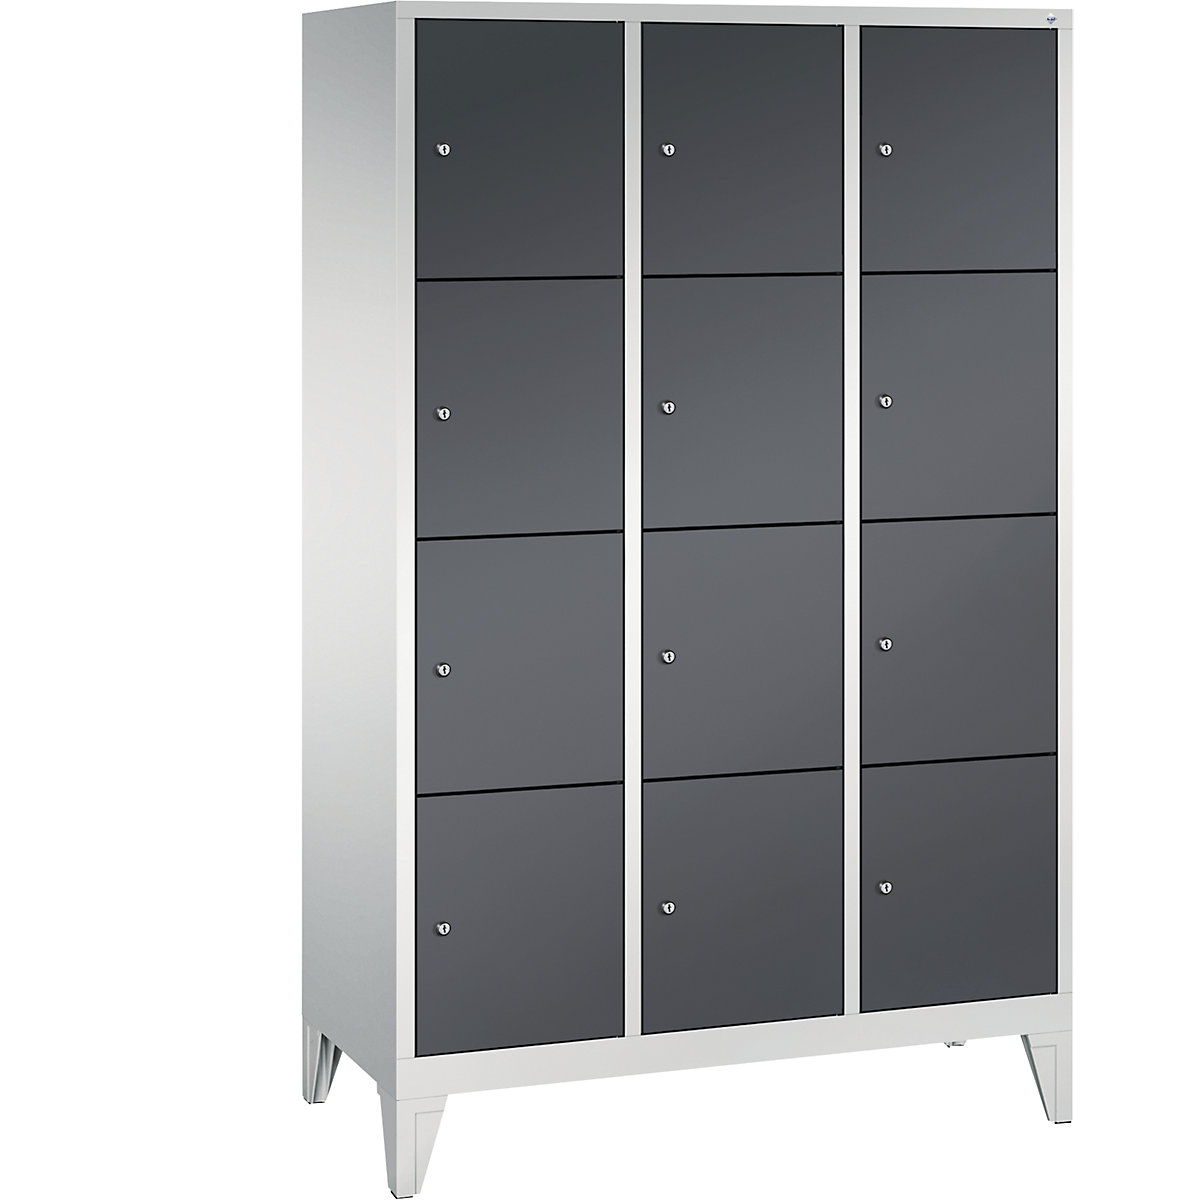 CLASSIC locker unit with feet – C+P, 3 compartments, 4 shelf compartments each, compartment width 400 mm, light grey / black grey-11